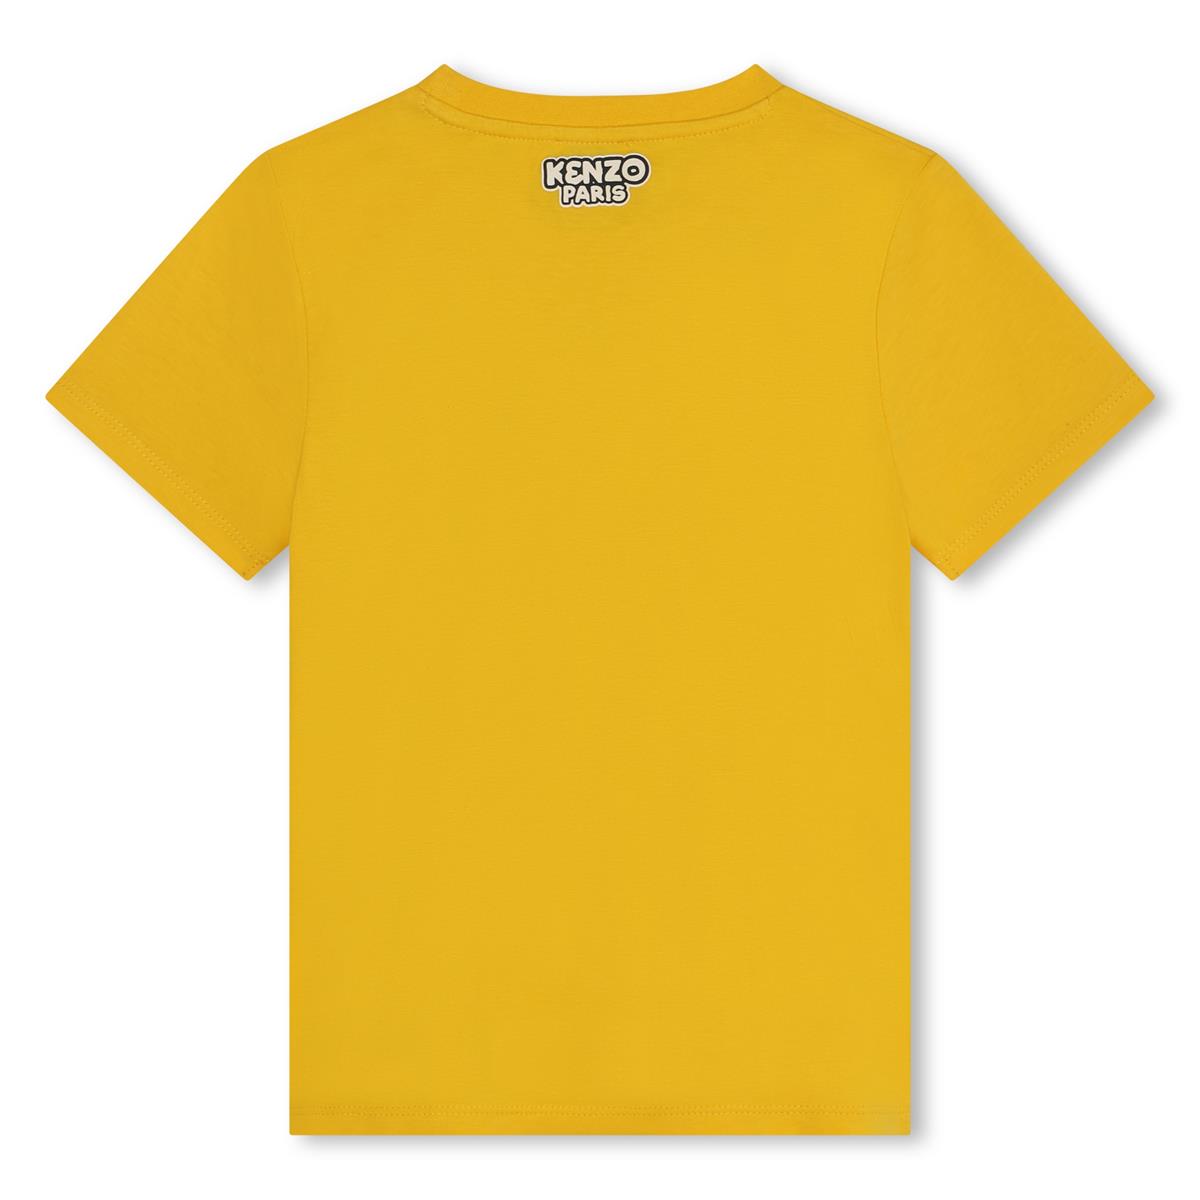 Boys Yellow Cotton T-Shirt